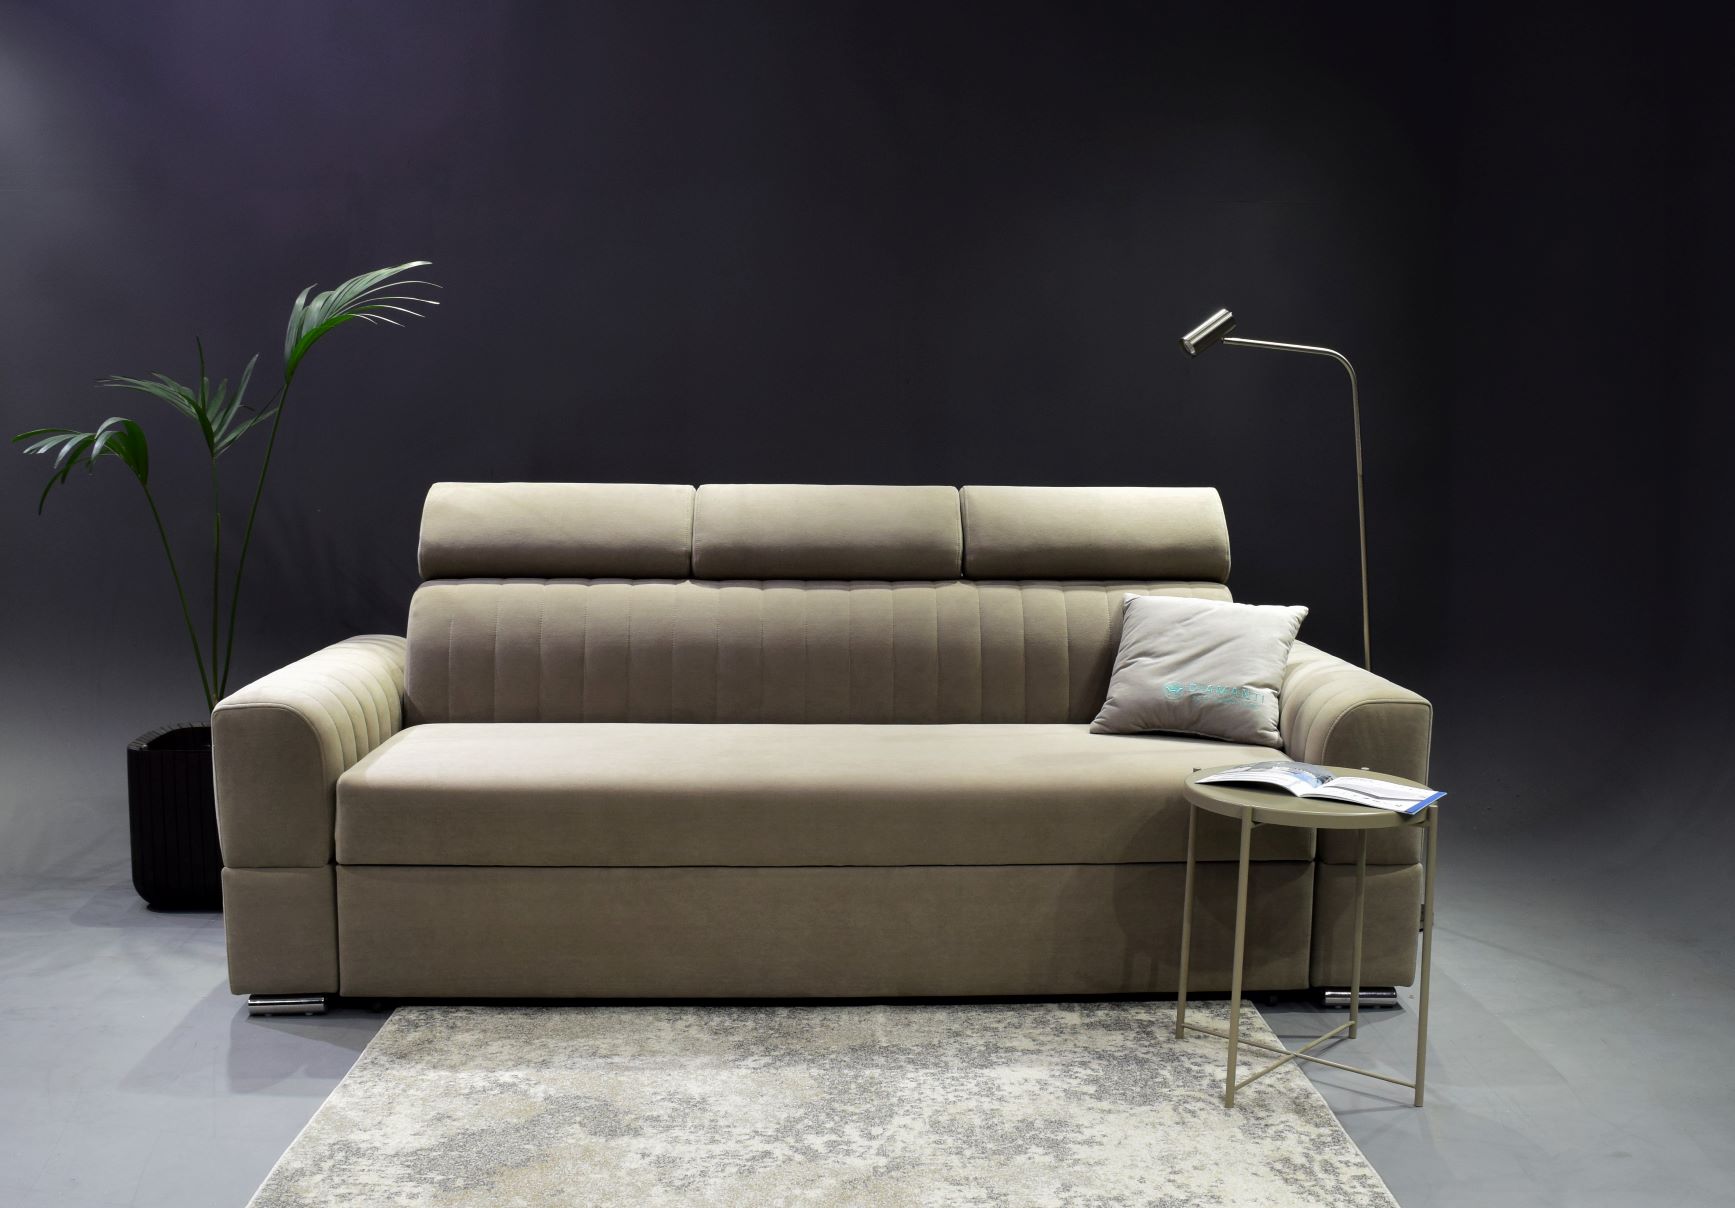 The Brooklyn Sofa